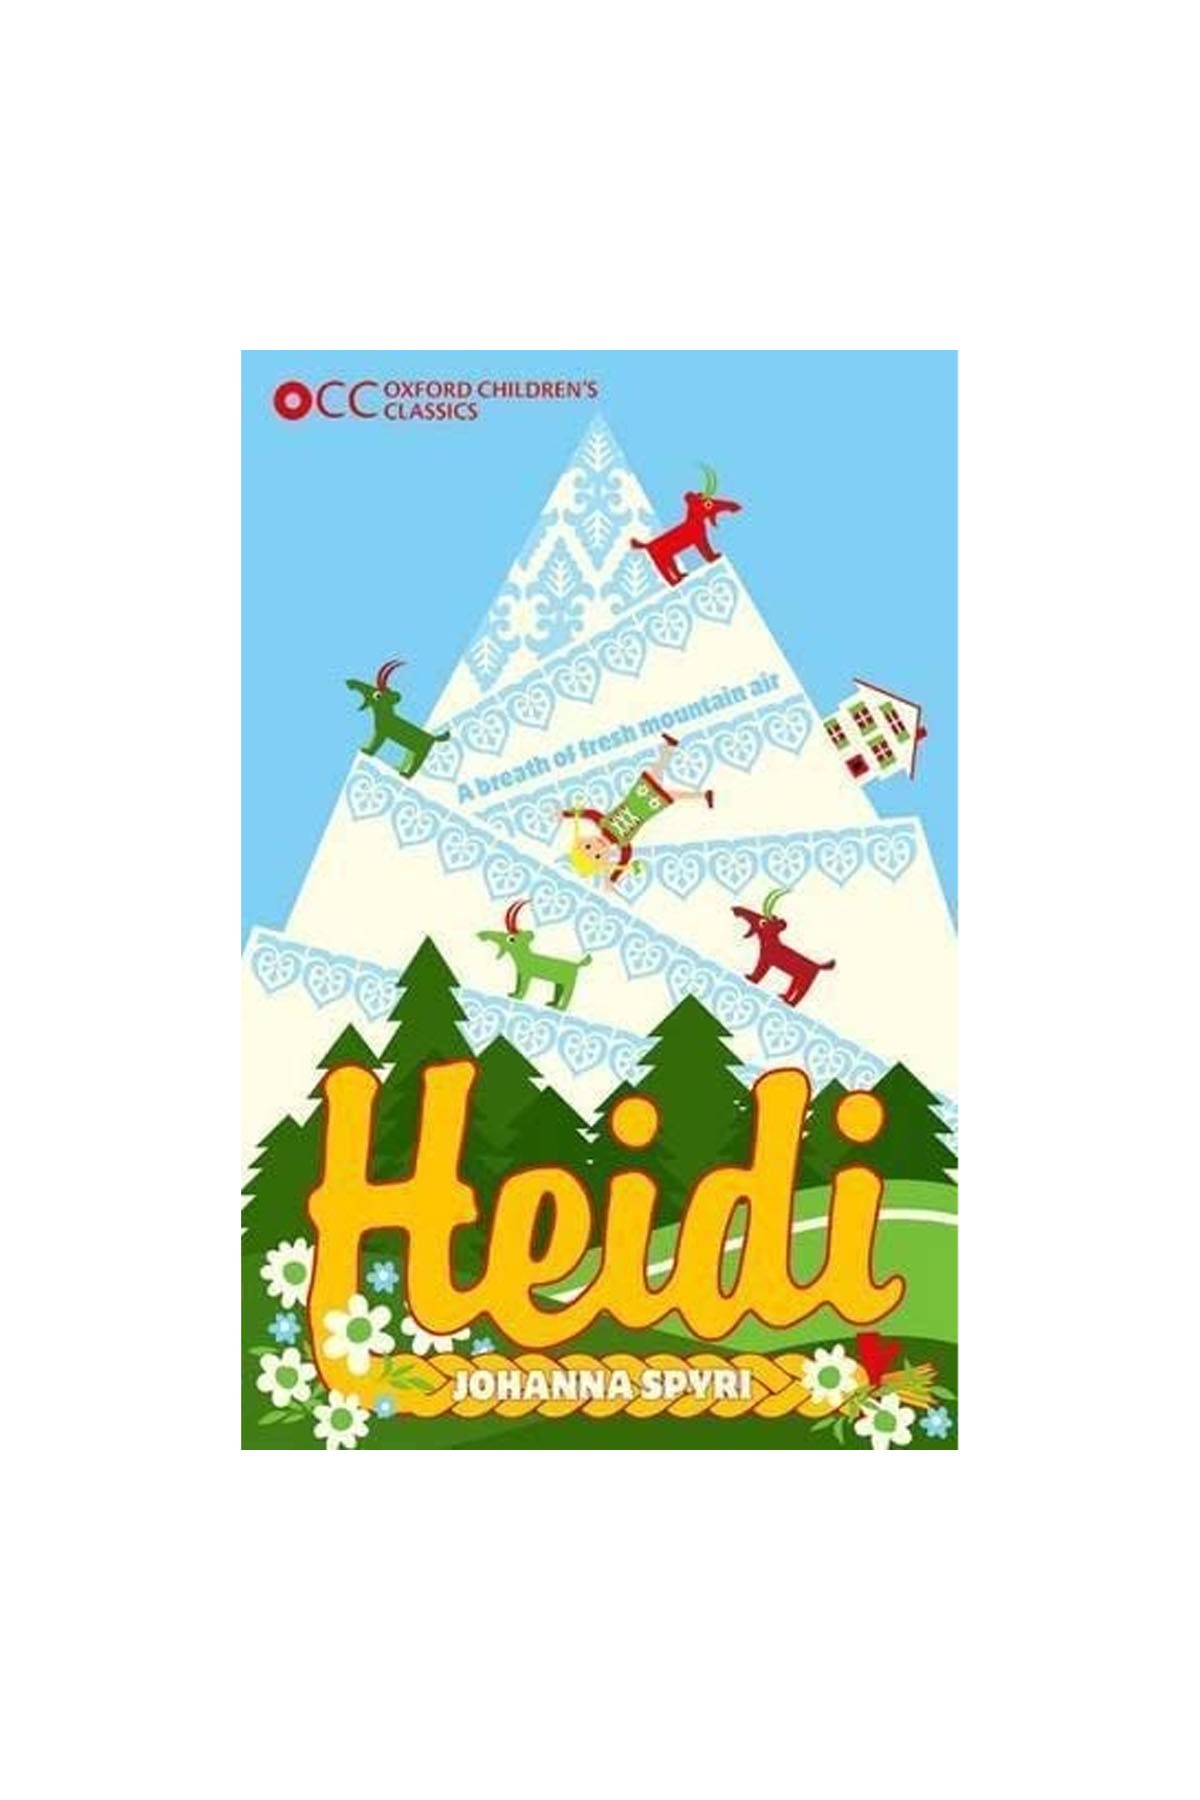 Oxford Childrens Book - Oxford ChildrenS Classics: Heidi